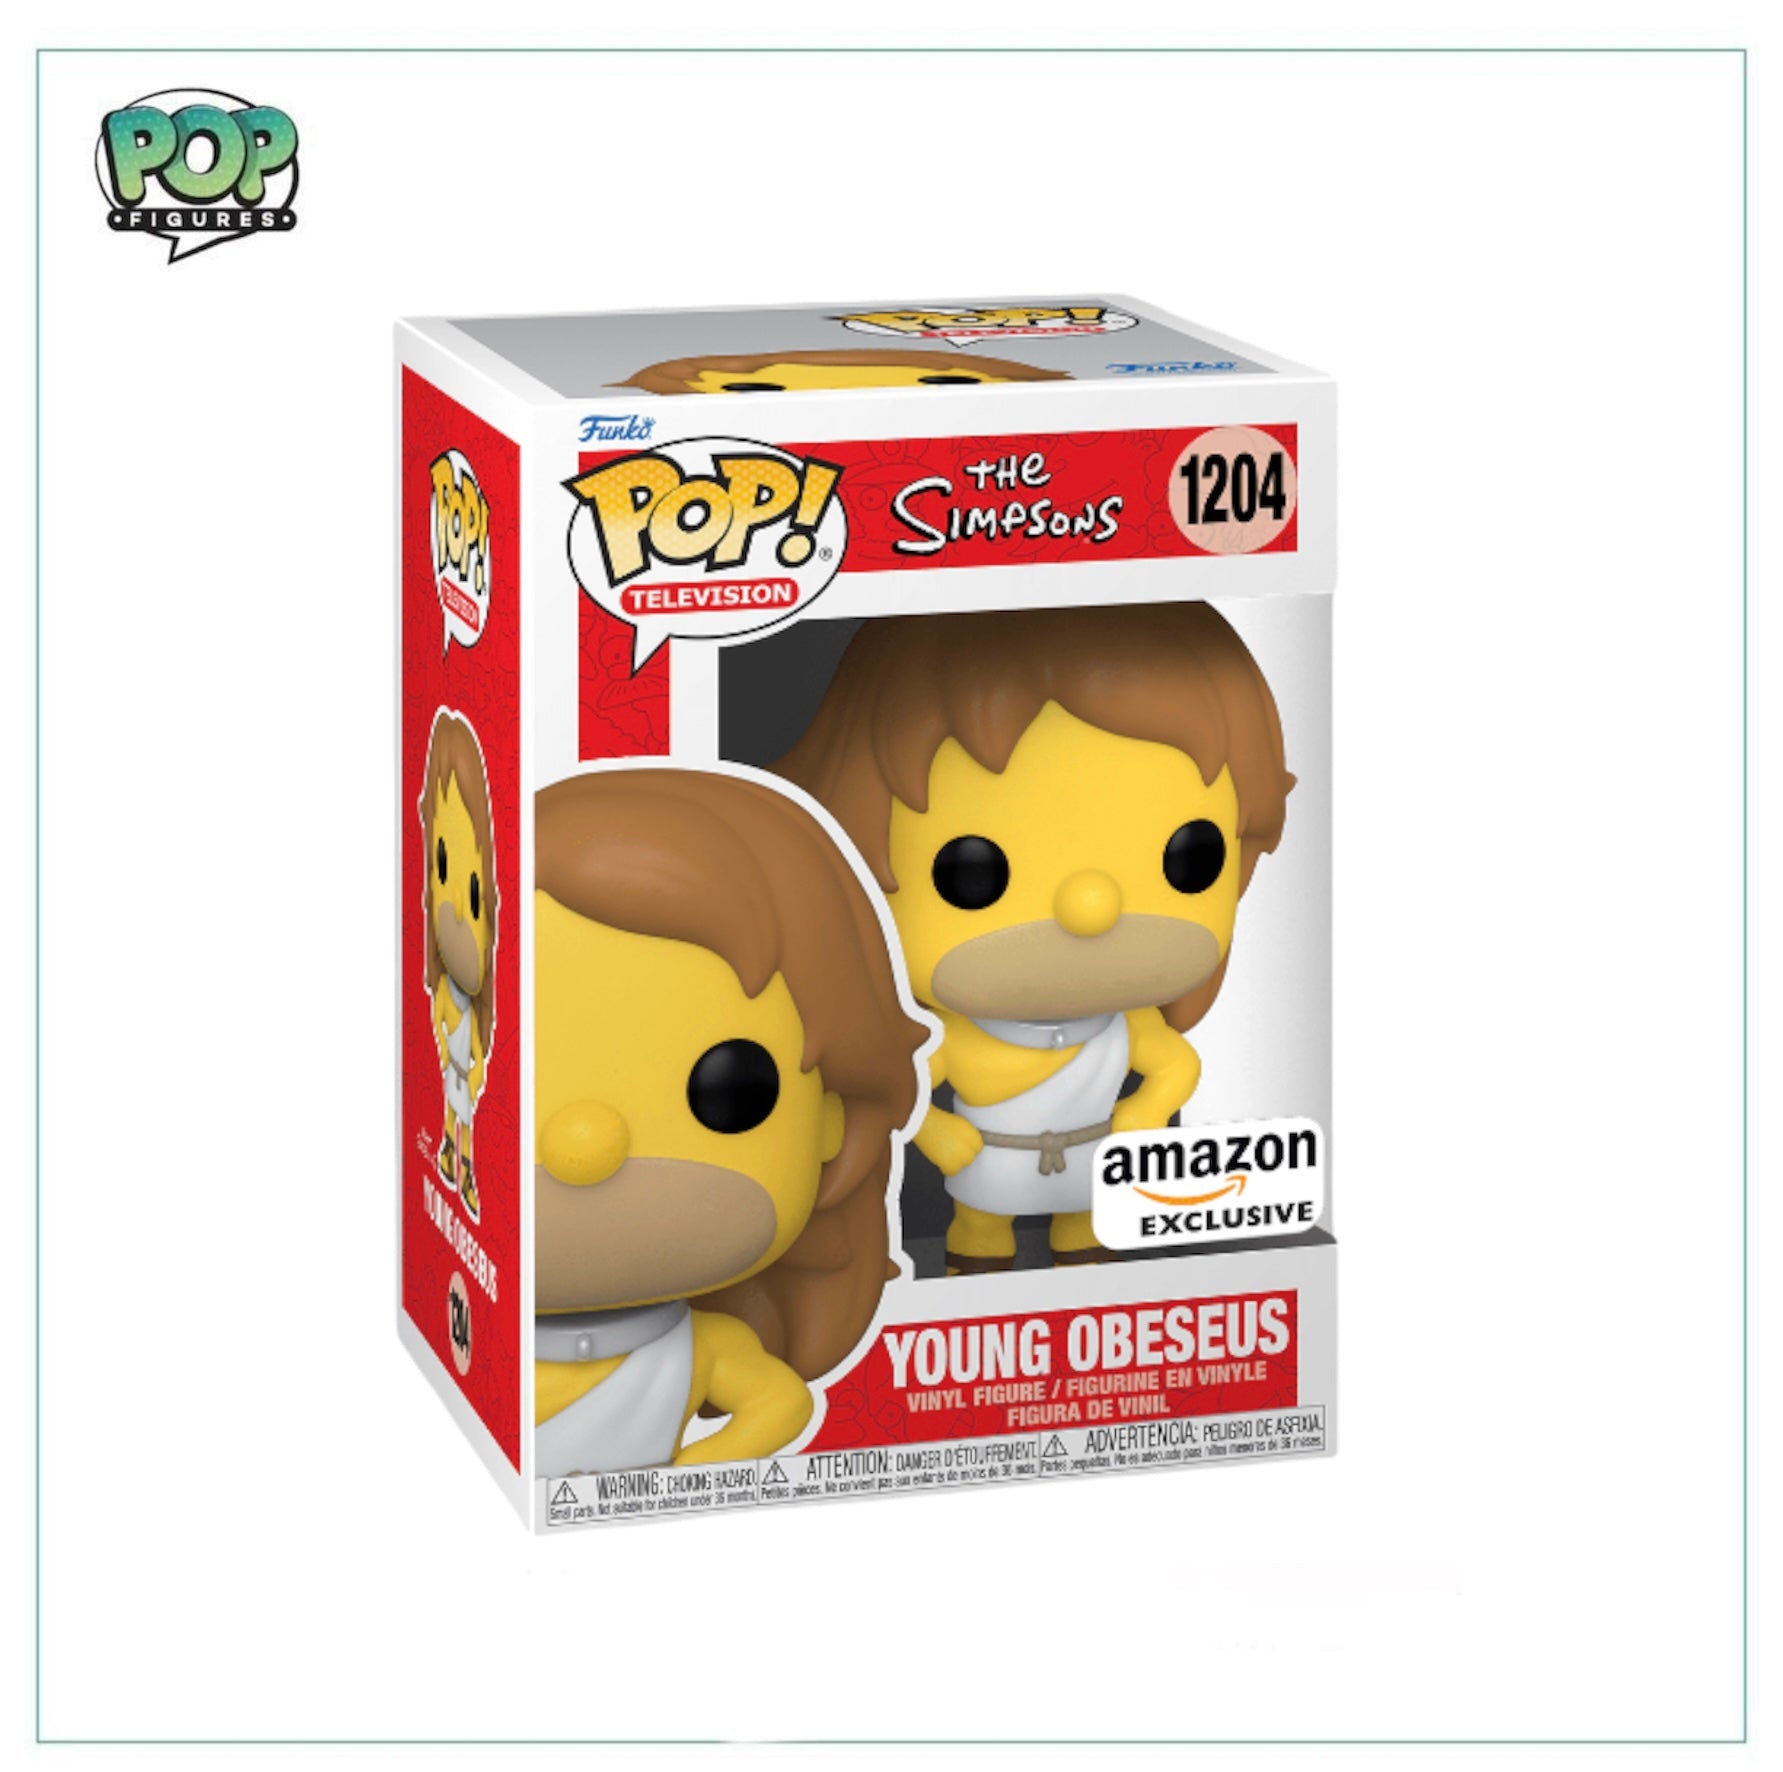 Young Obeseus #1204 Funko Pop! The Simpsons - Amazon Exclusive